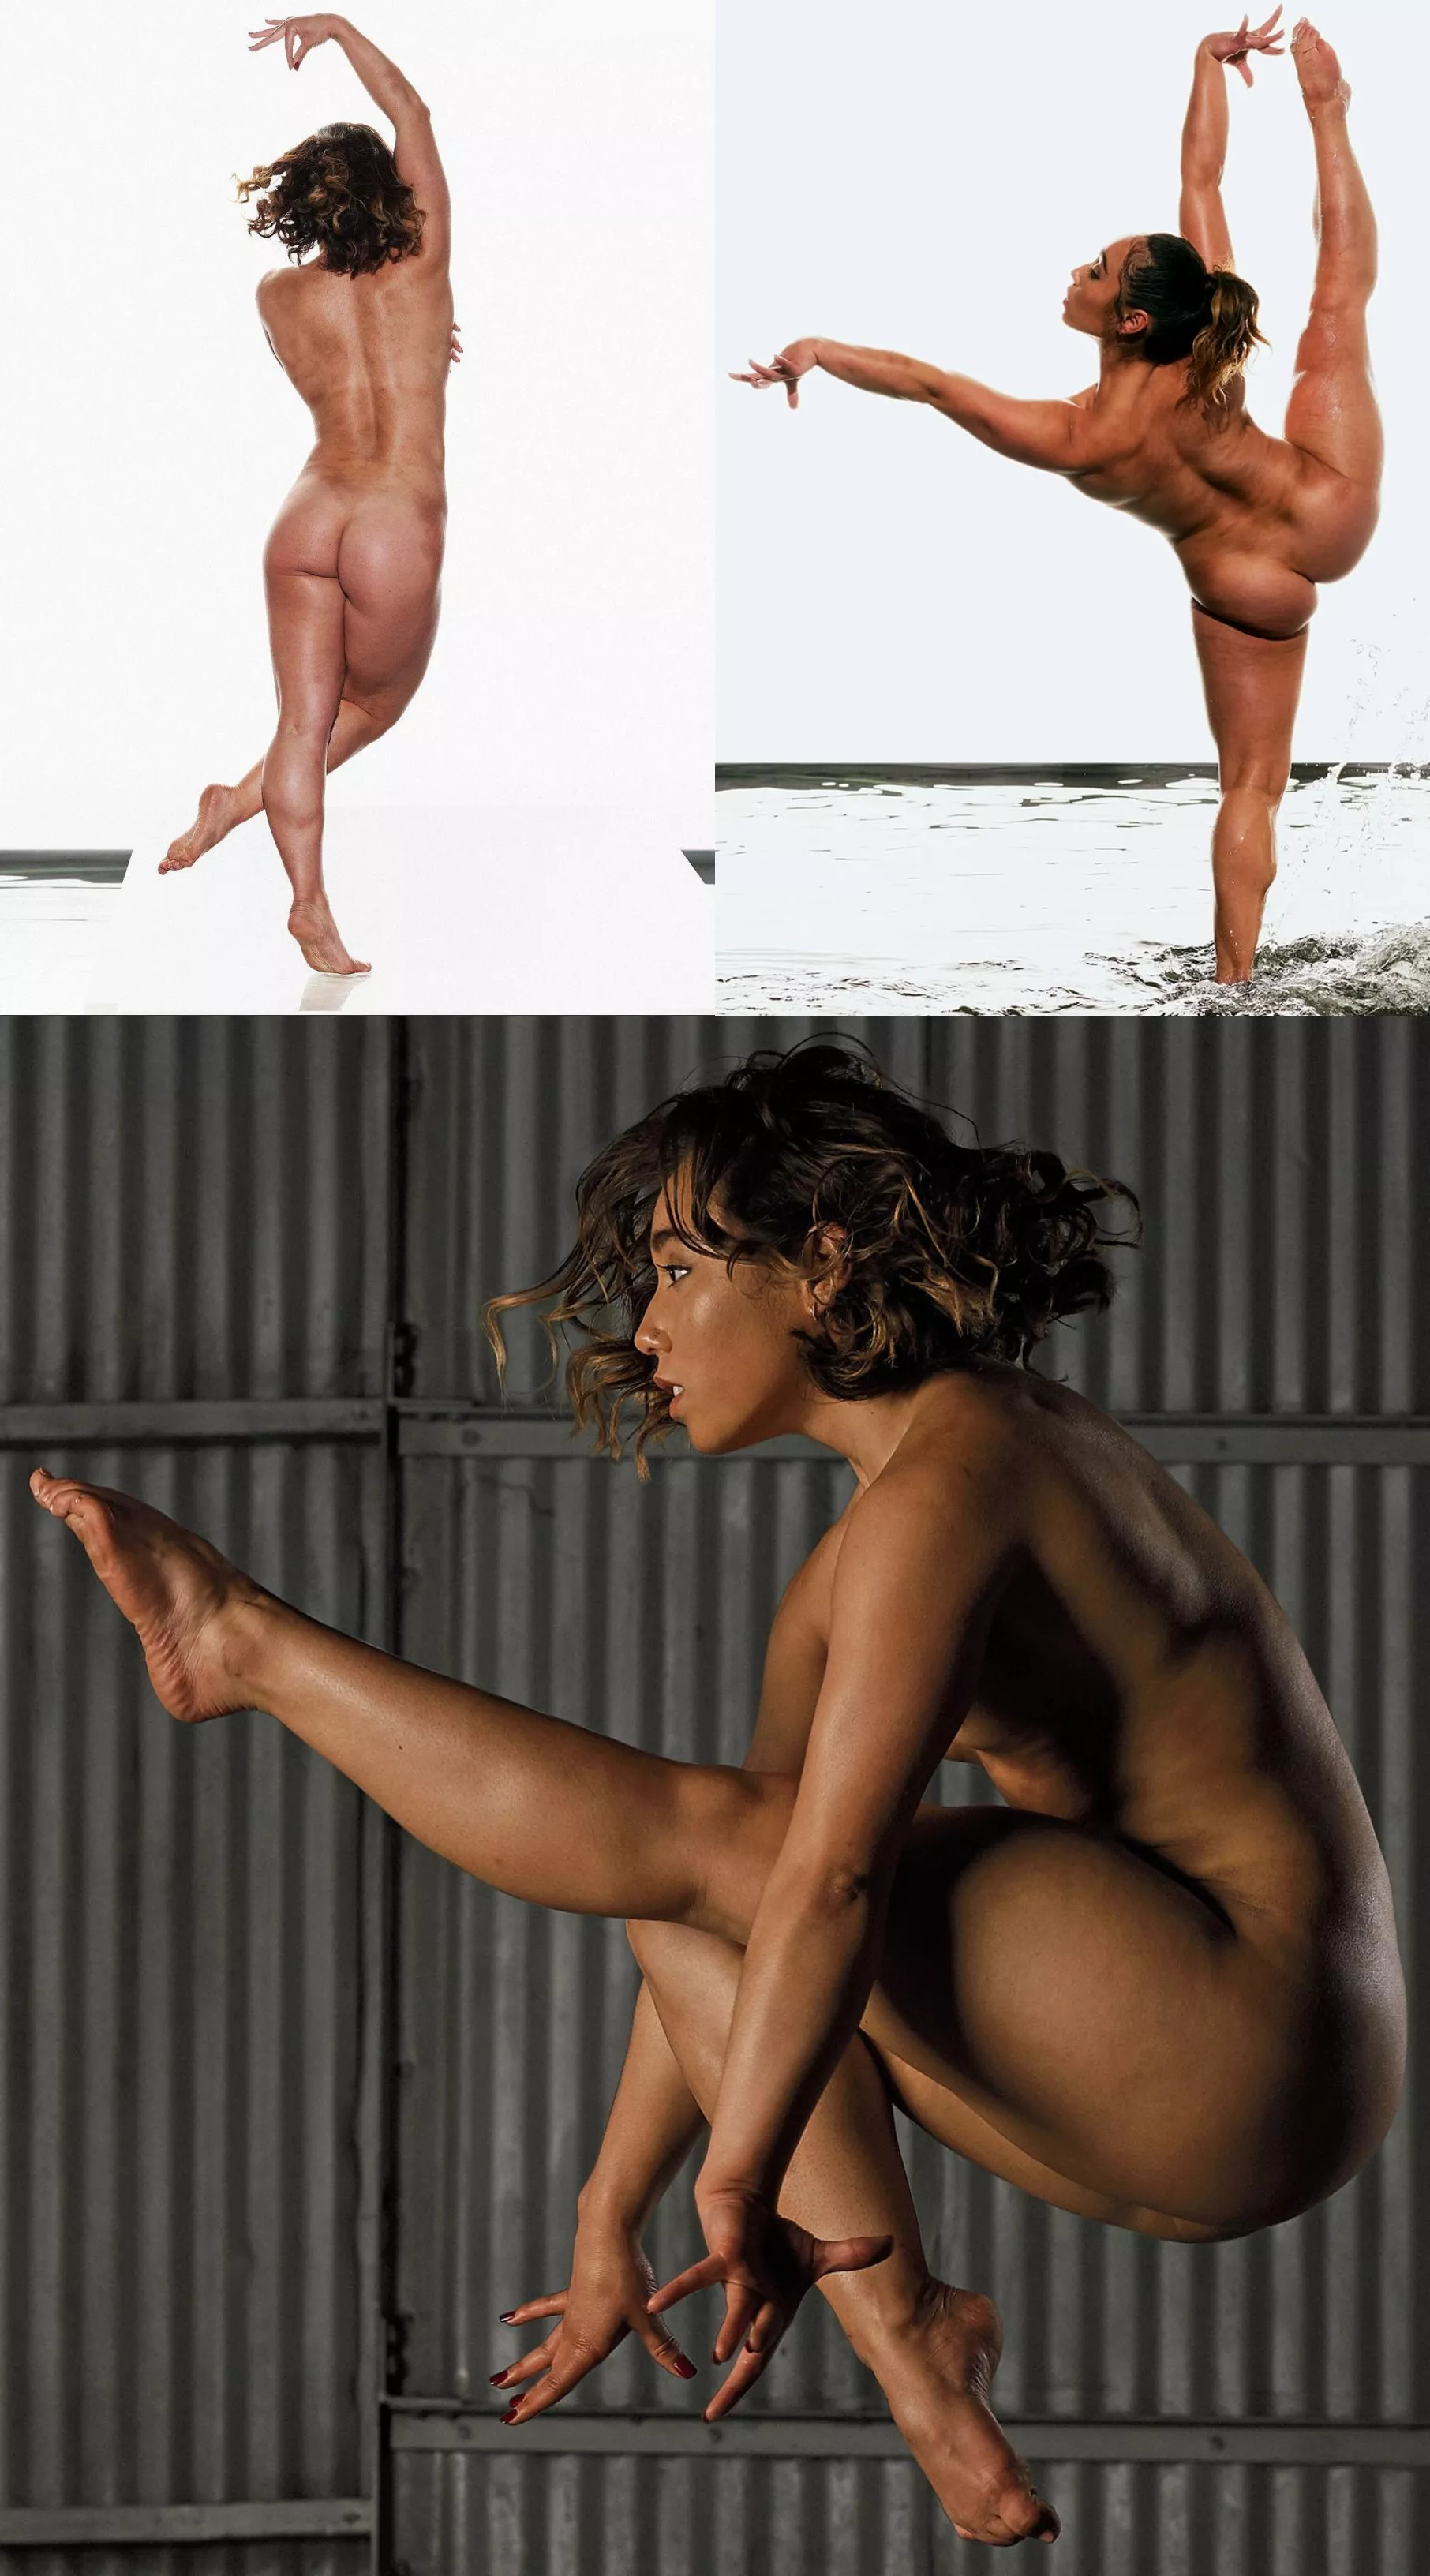 Katelyn ohashi nude photos